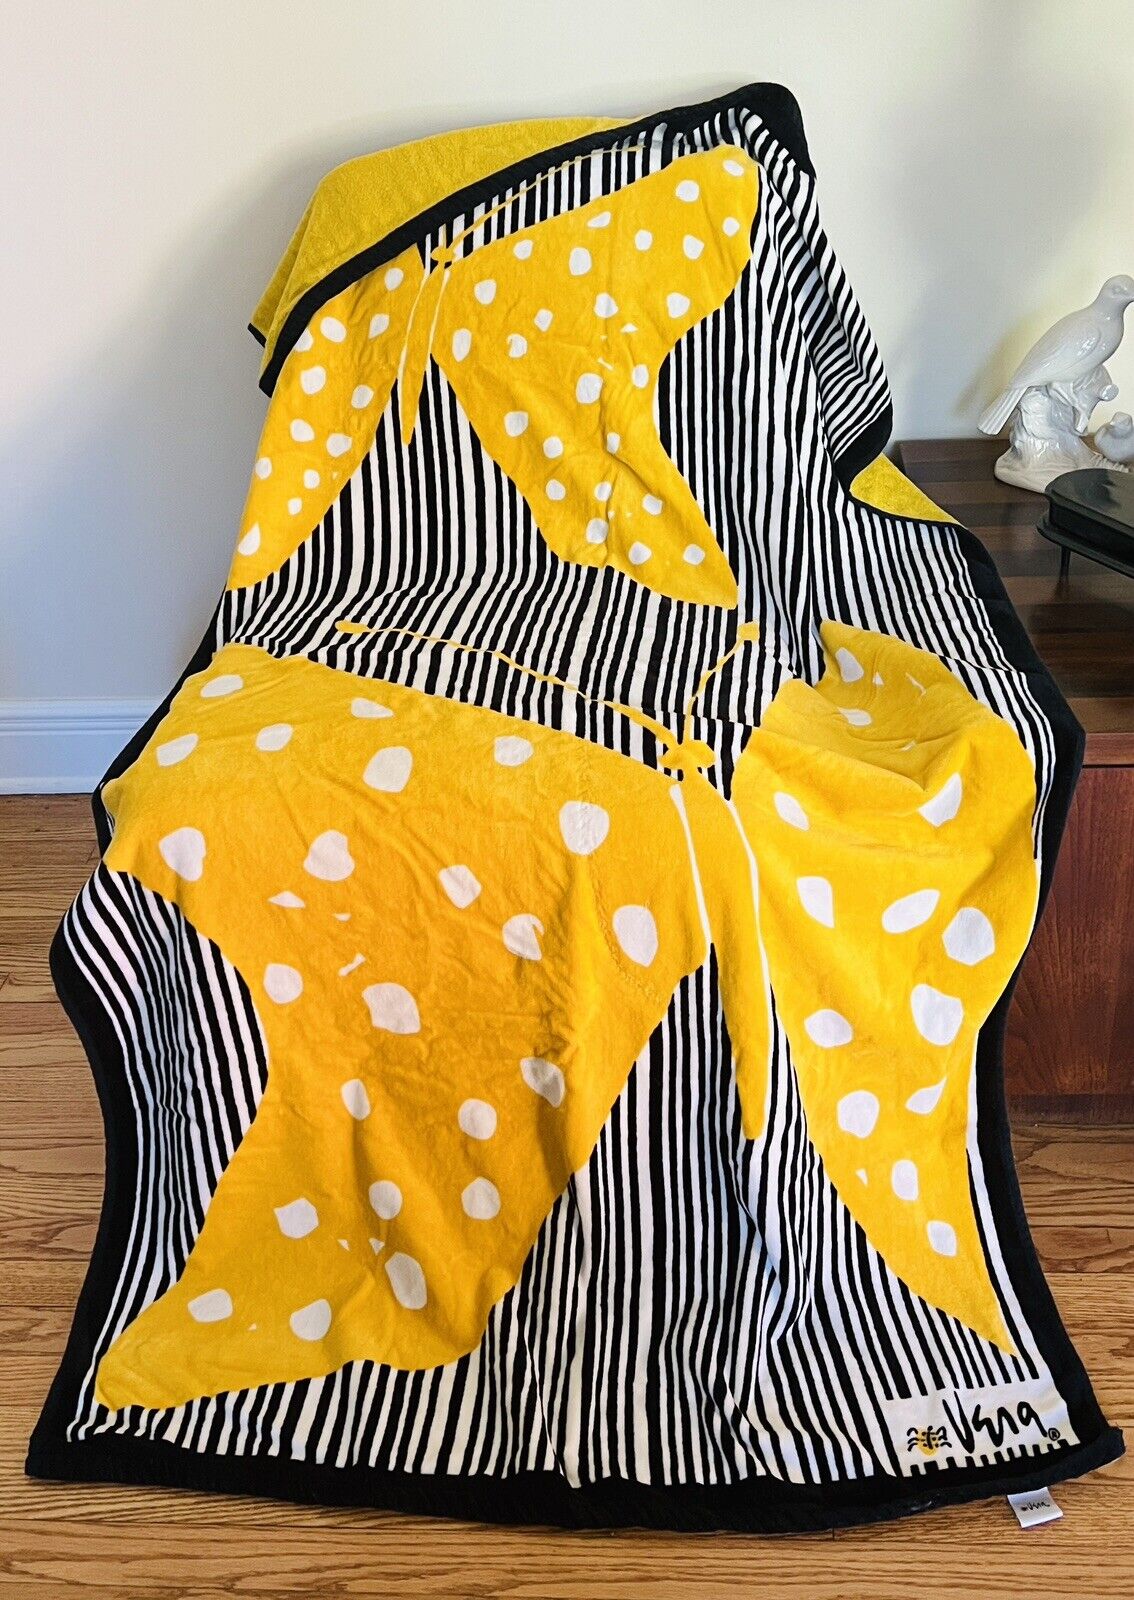 Vera Bradley Beach Towel Ltd Ed  Yellow Butterfly Dots Black White Large.  NWT